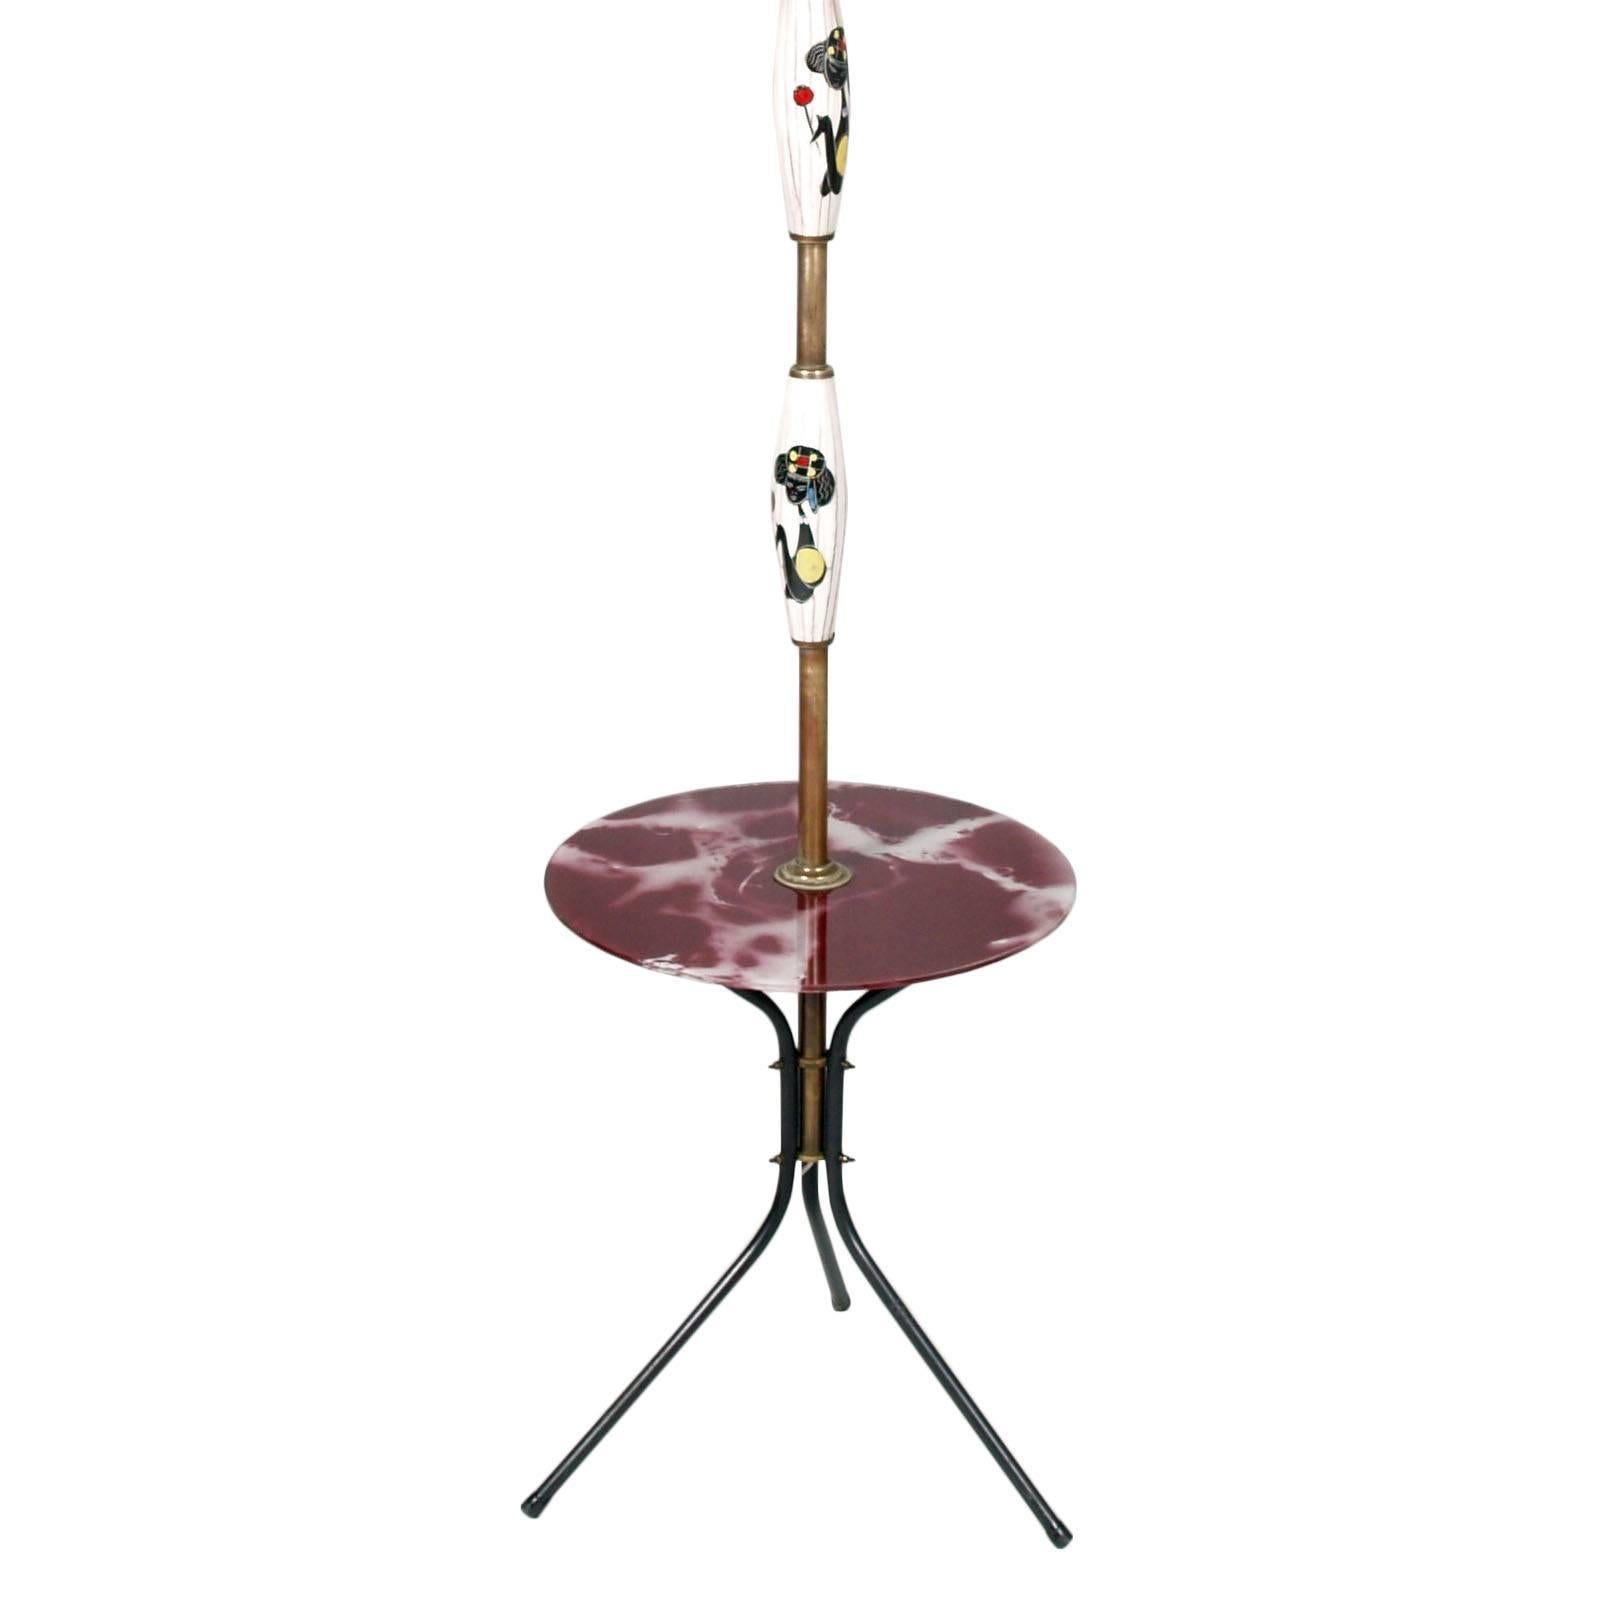 Italian Mid-Century Modern Tripod Floor Lamp with Coffee Table in Gio Ponti Style